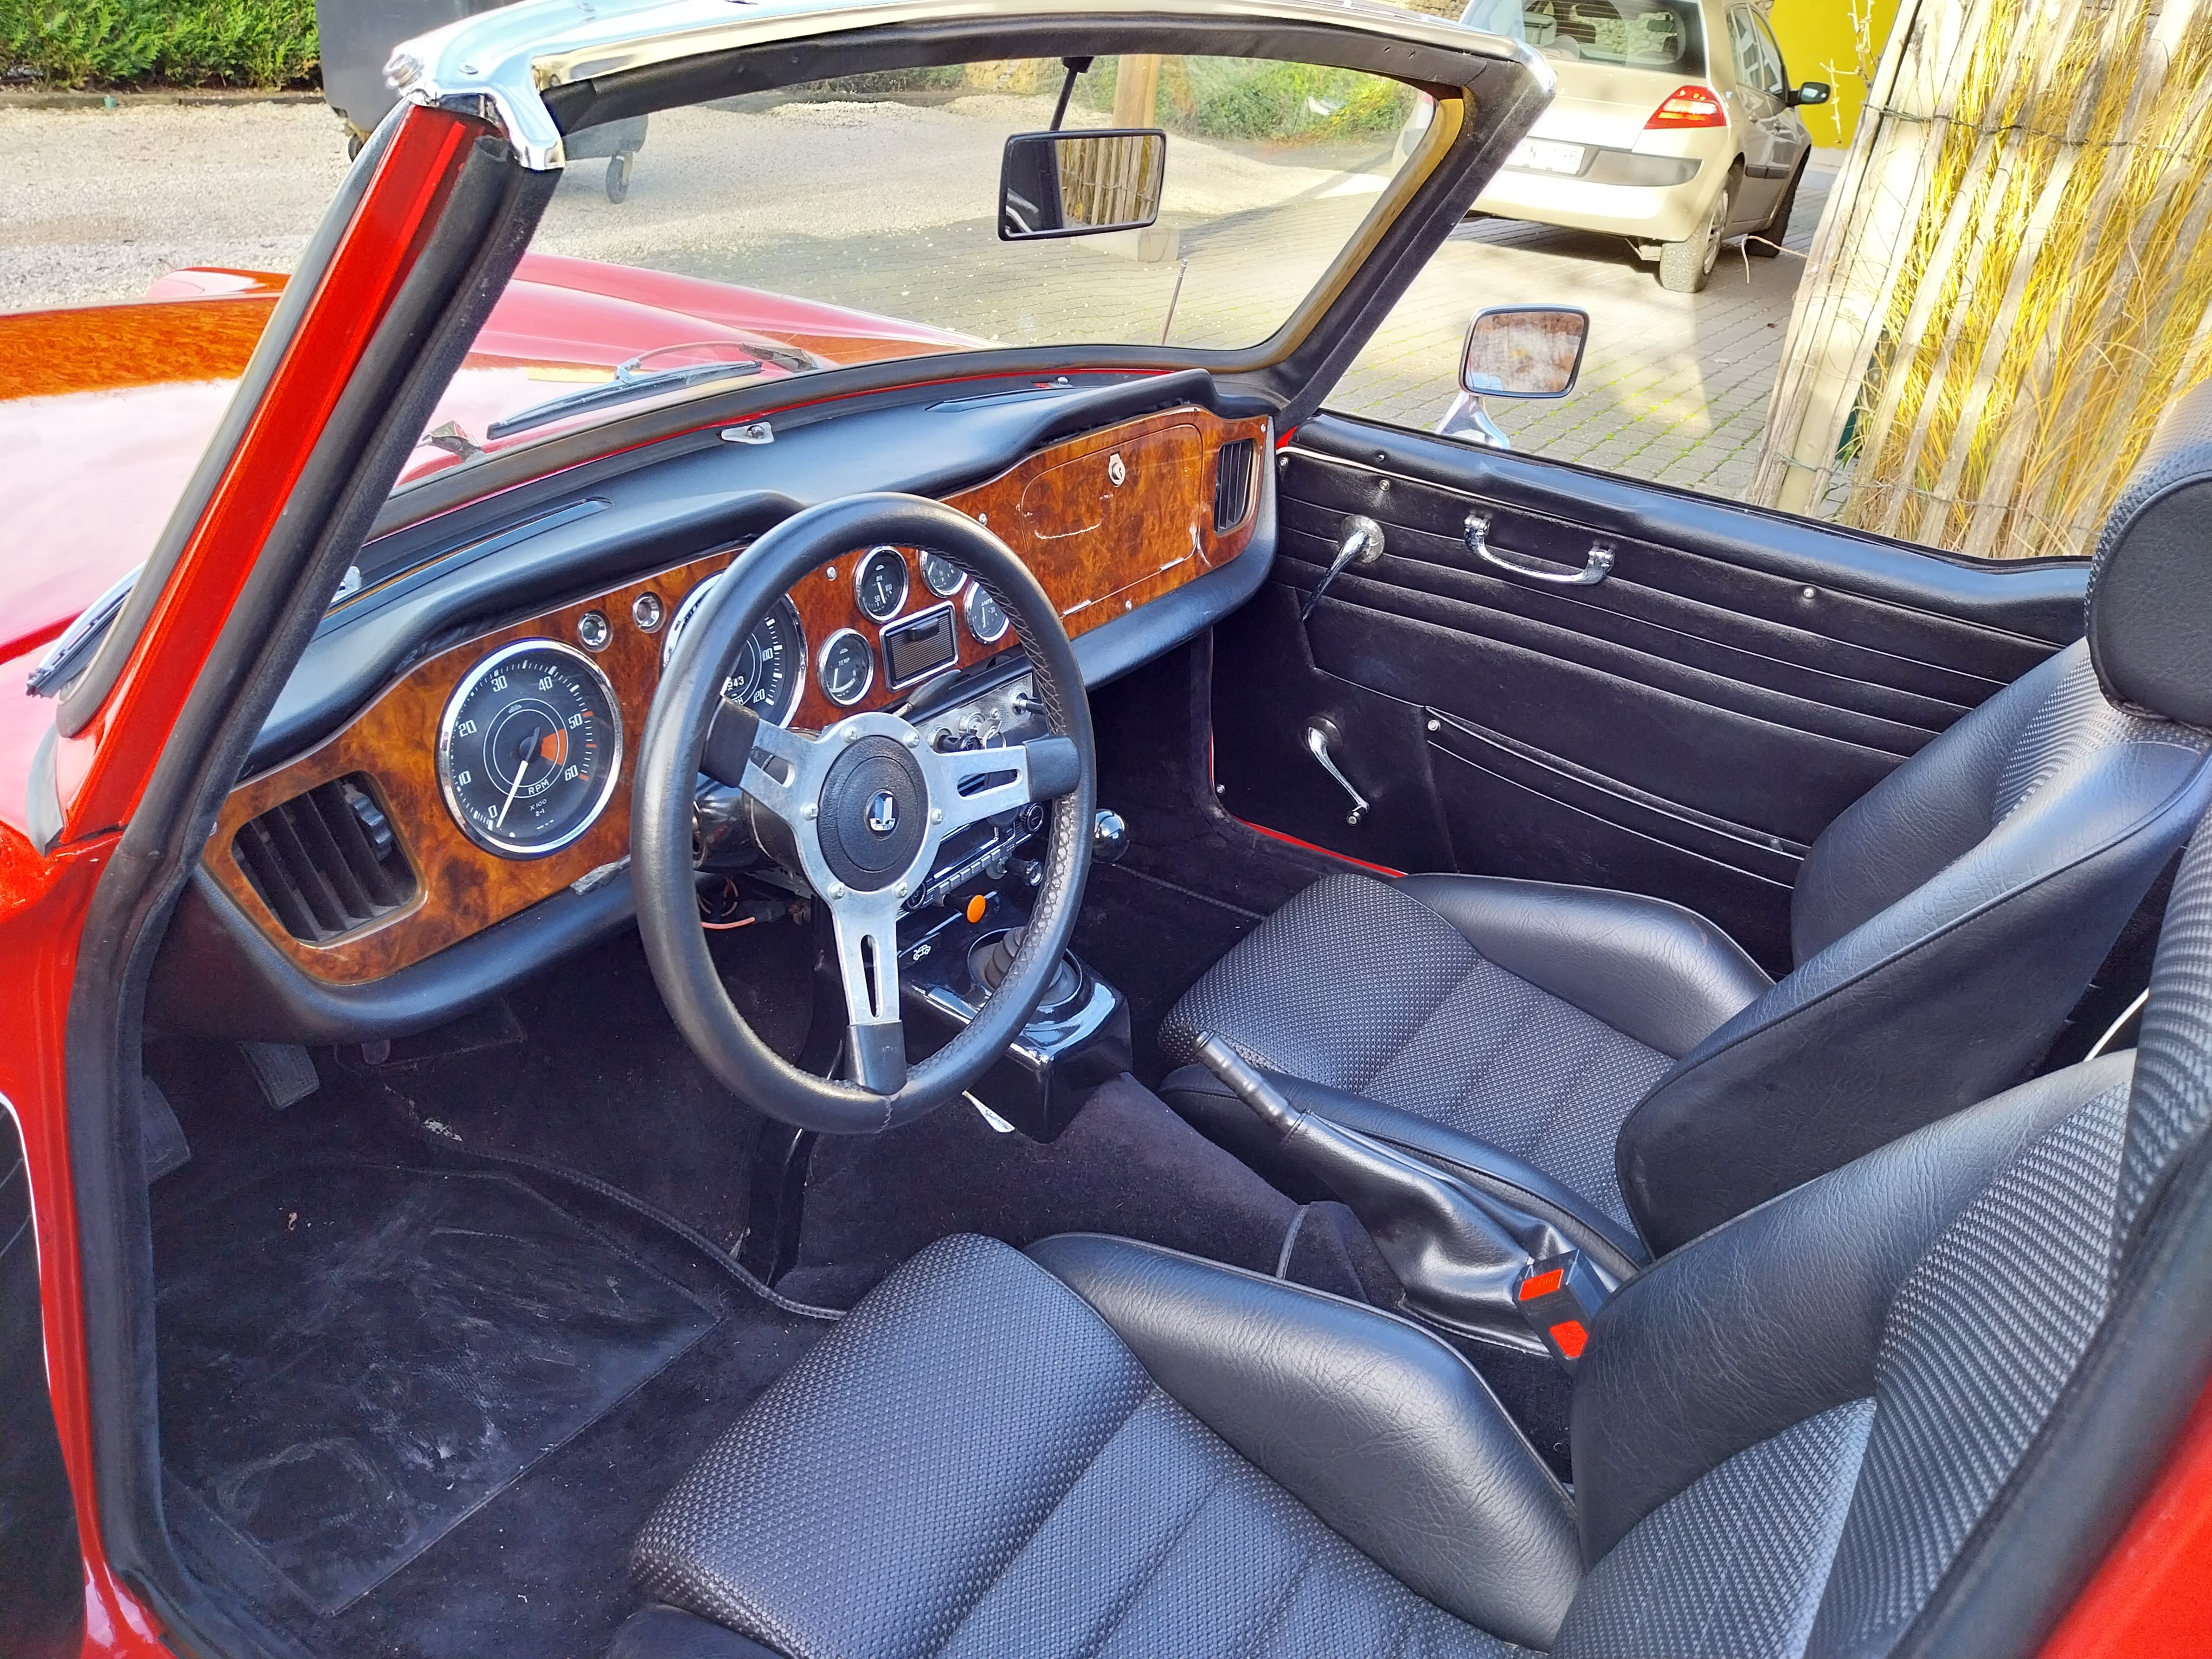 1966 Triumph TR4 A IRS oldtimer te koop